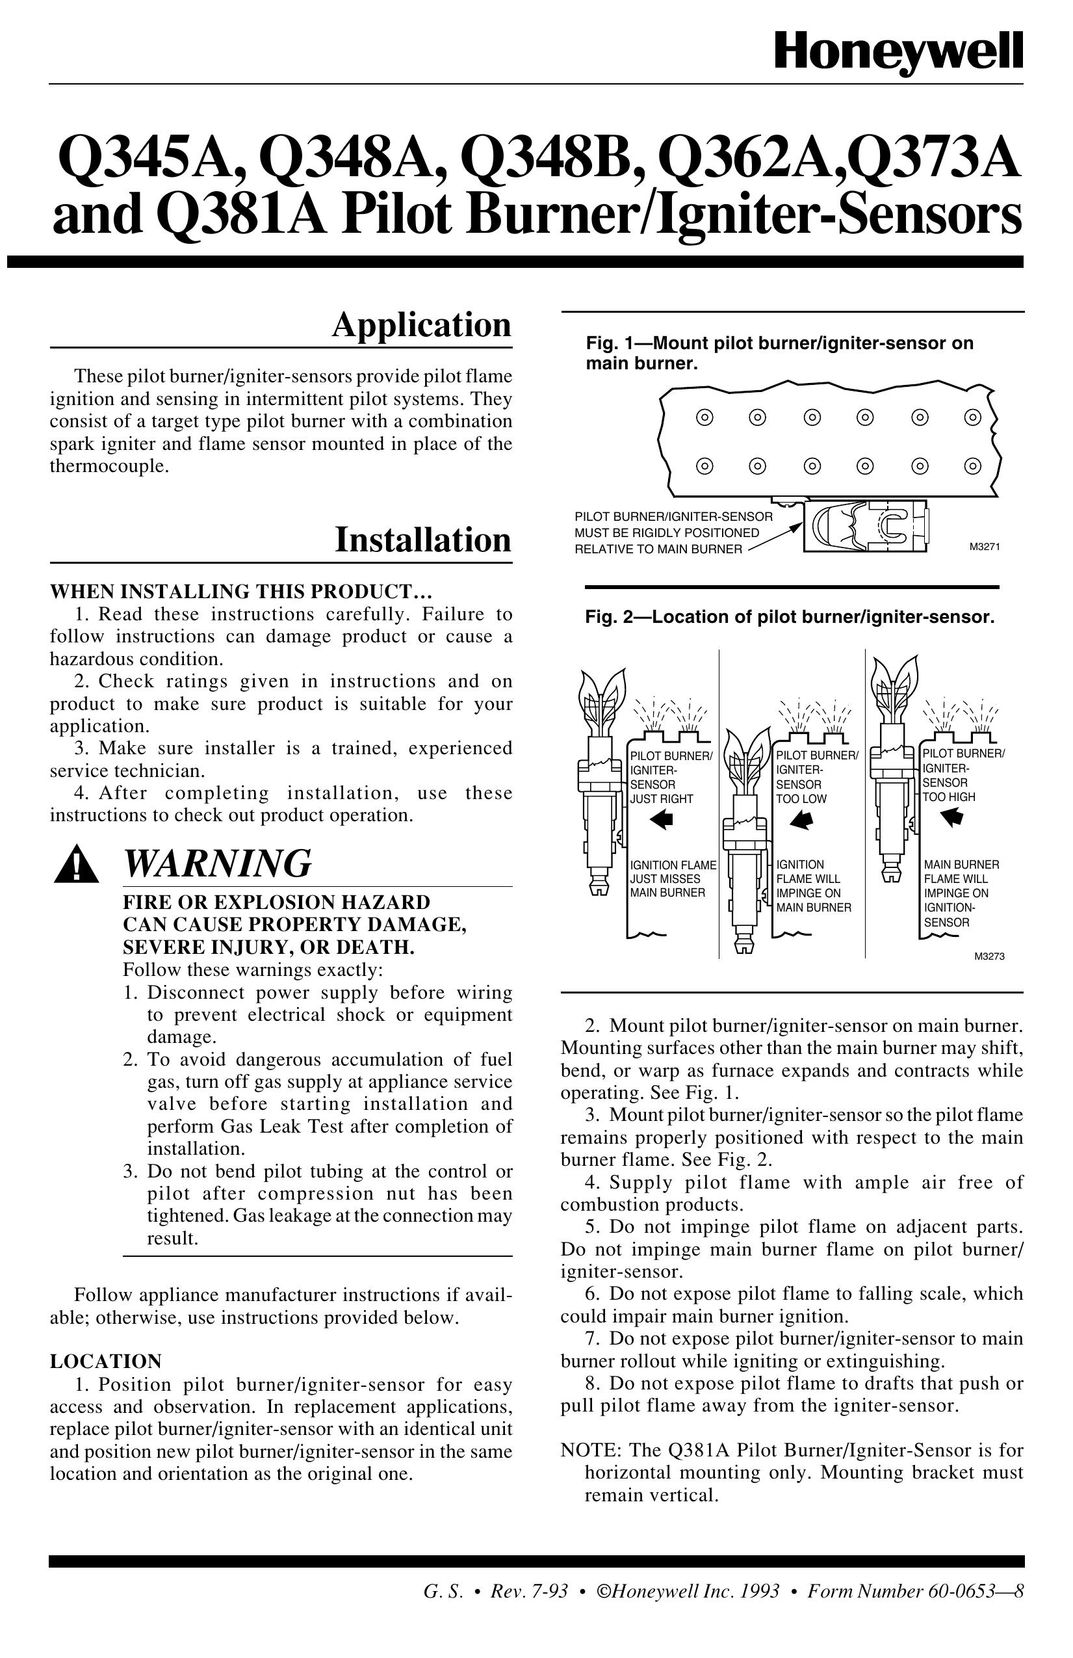 Honeywell Q373A Burner User Manual